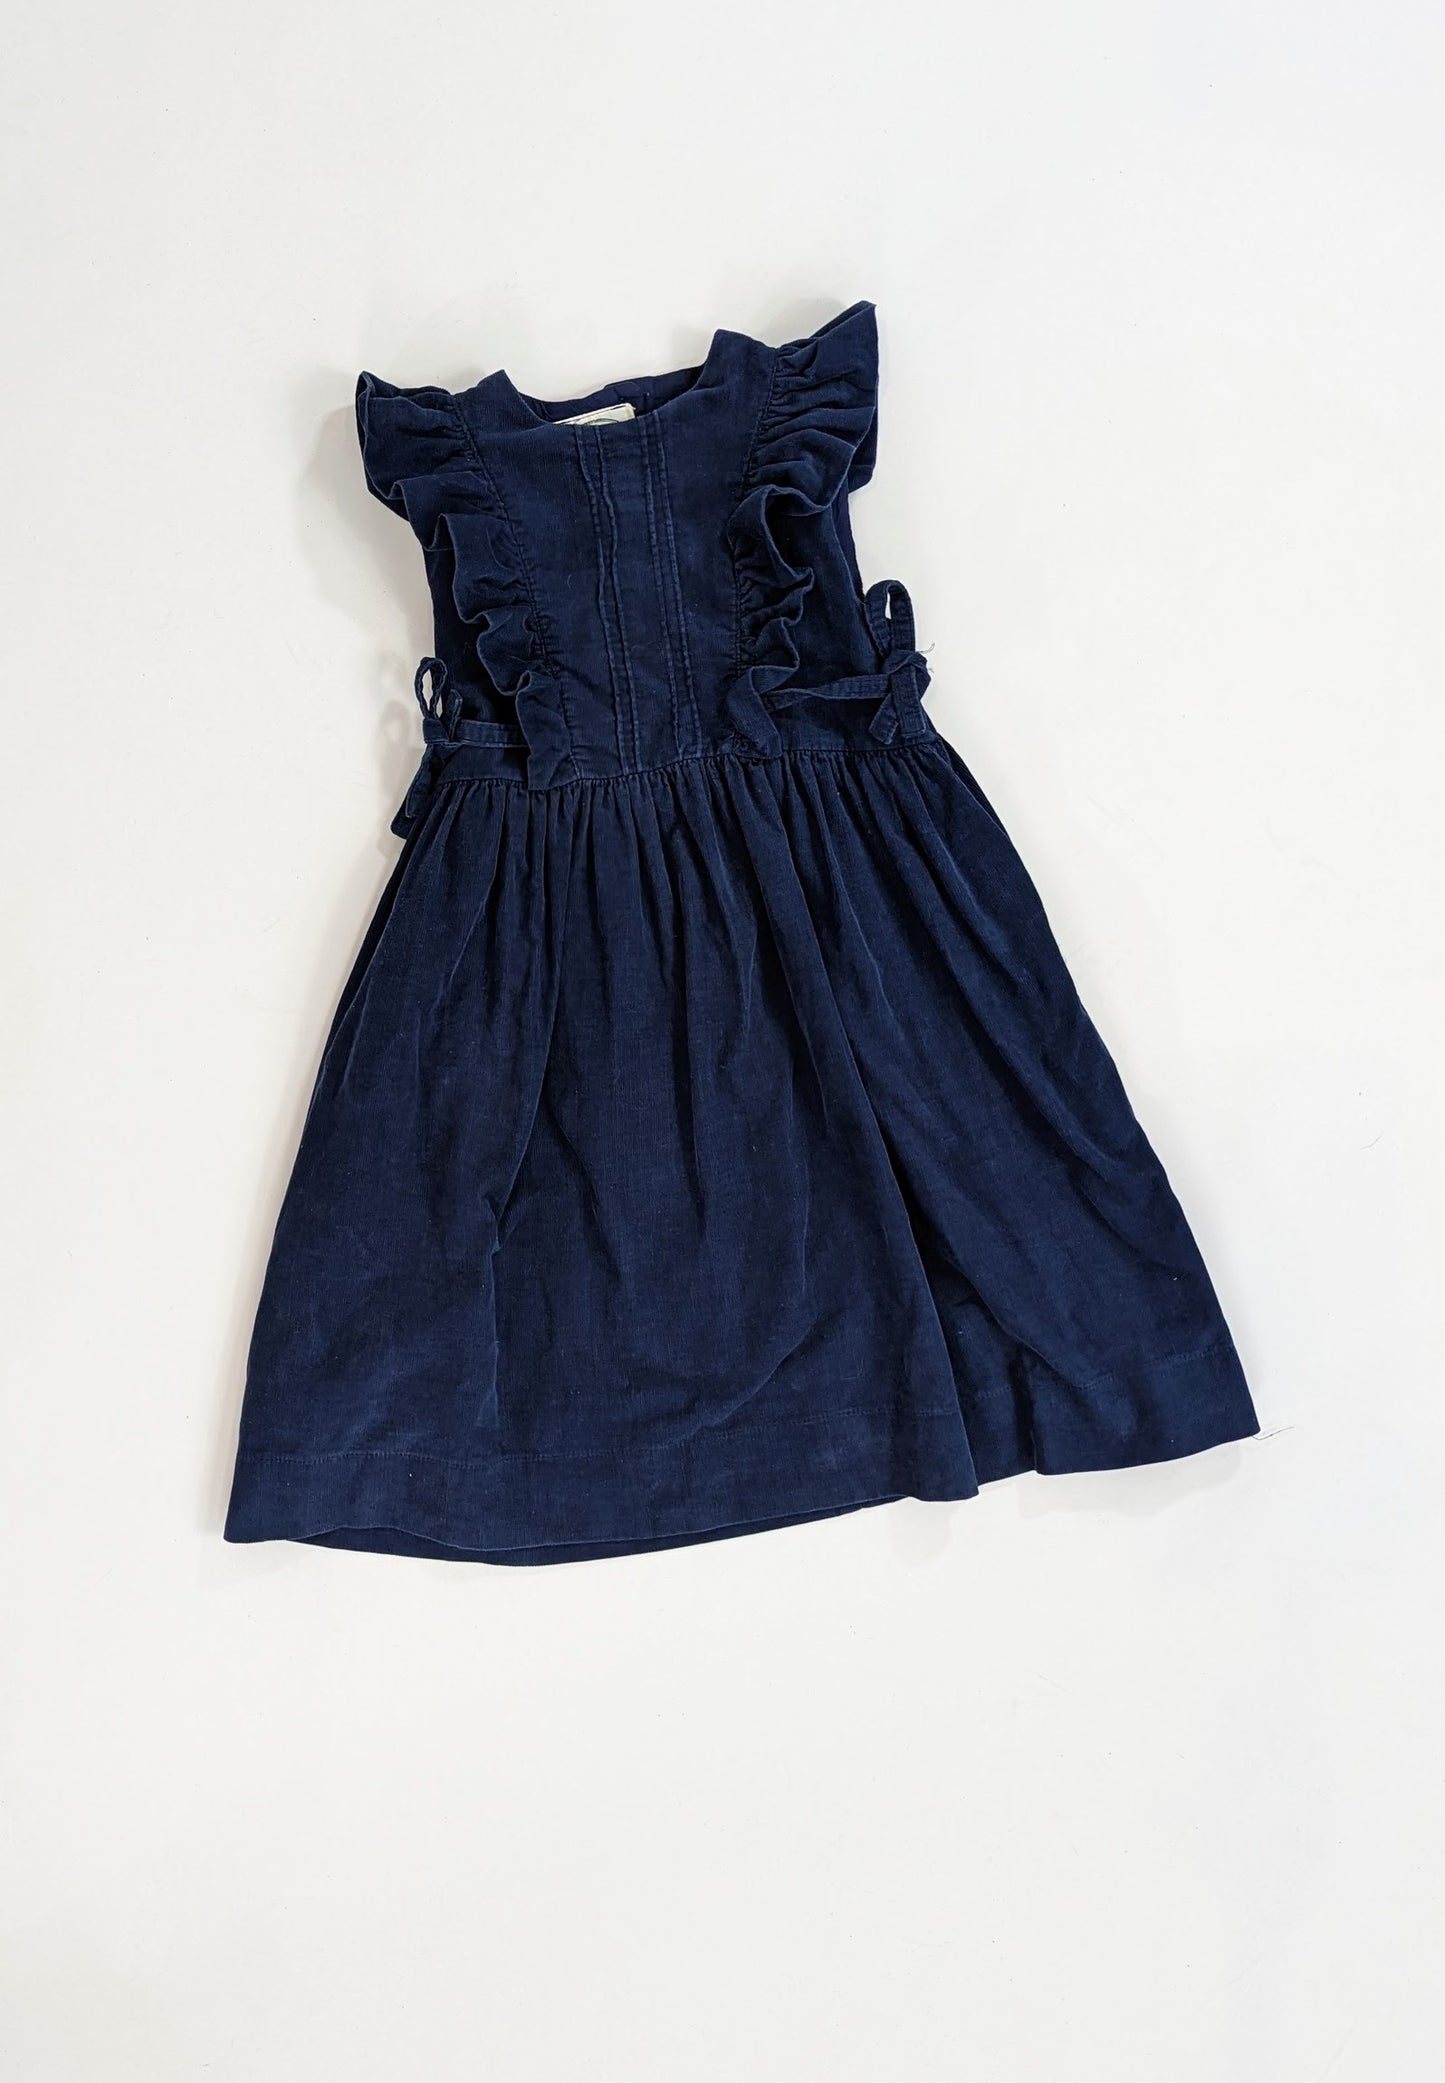 Vintage Laura Ashley Child's dress